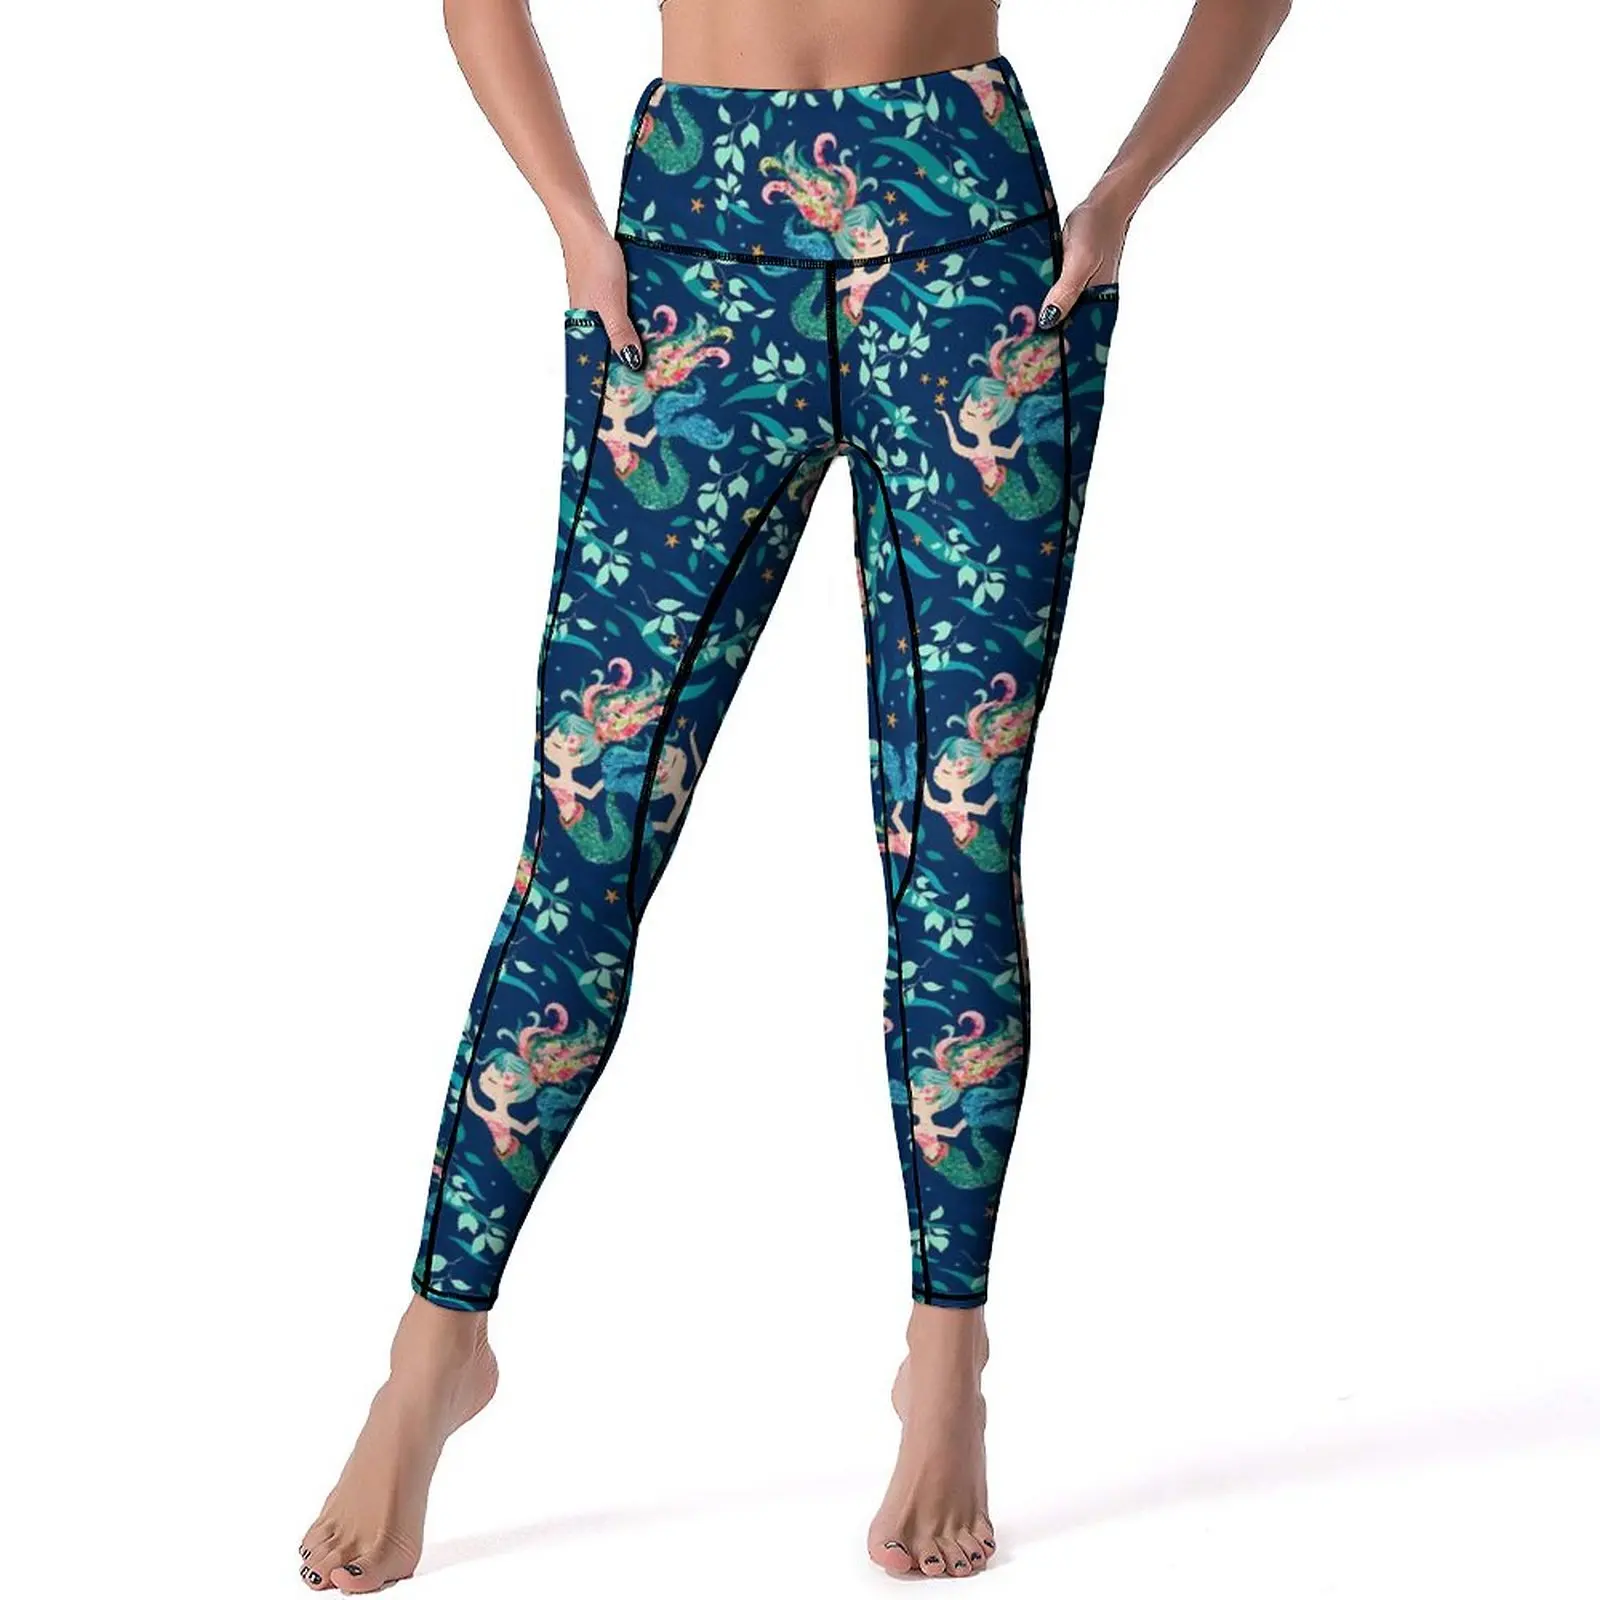 

Mermaids Leggings Colorful Floral Print Fitness Yoga Pants Female Push Up Elegant Leggins Sexy Elastic Graphic Sports Tights